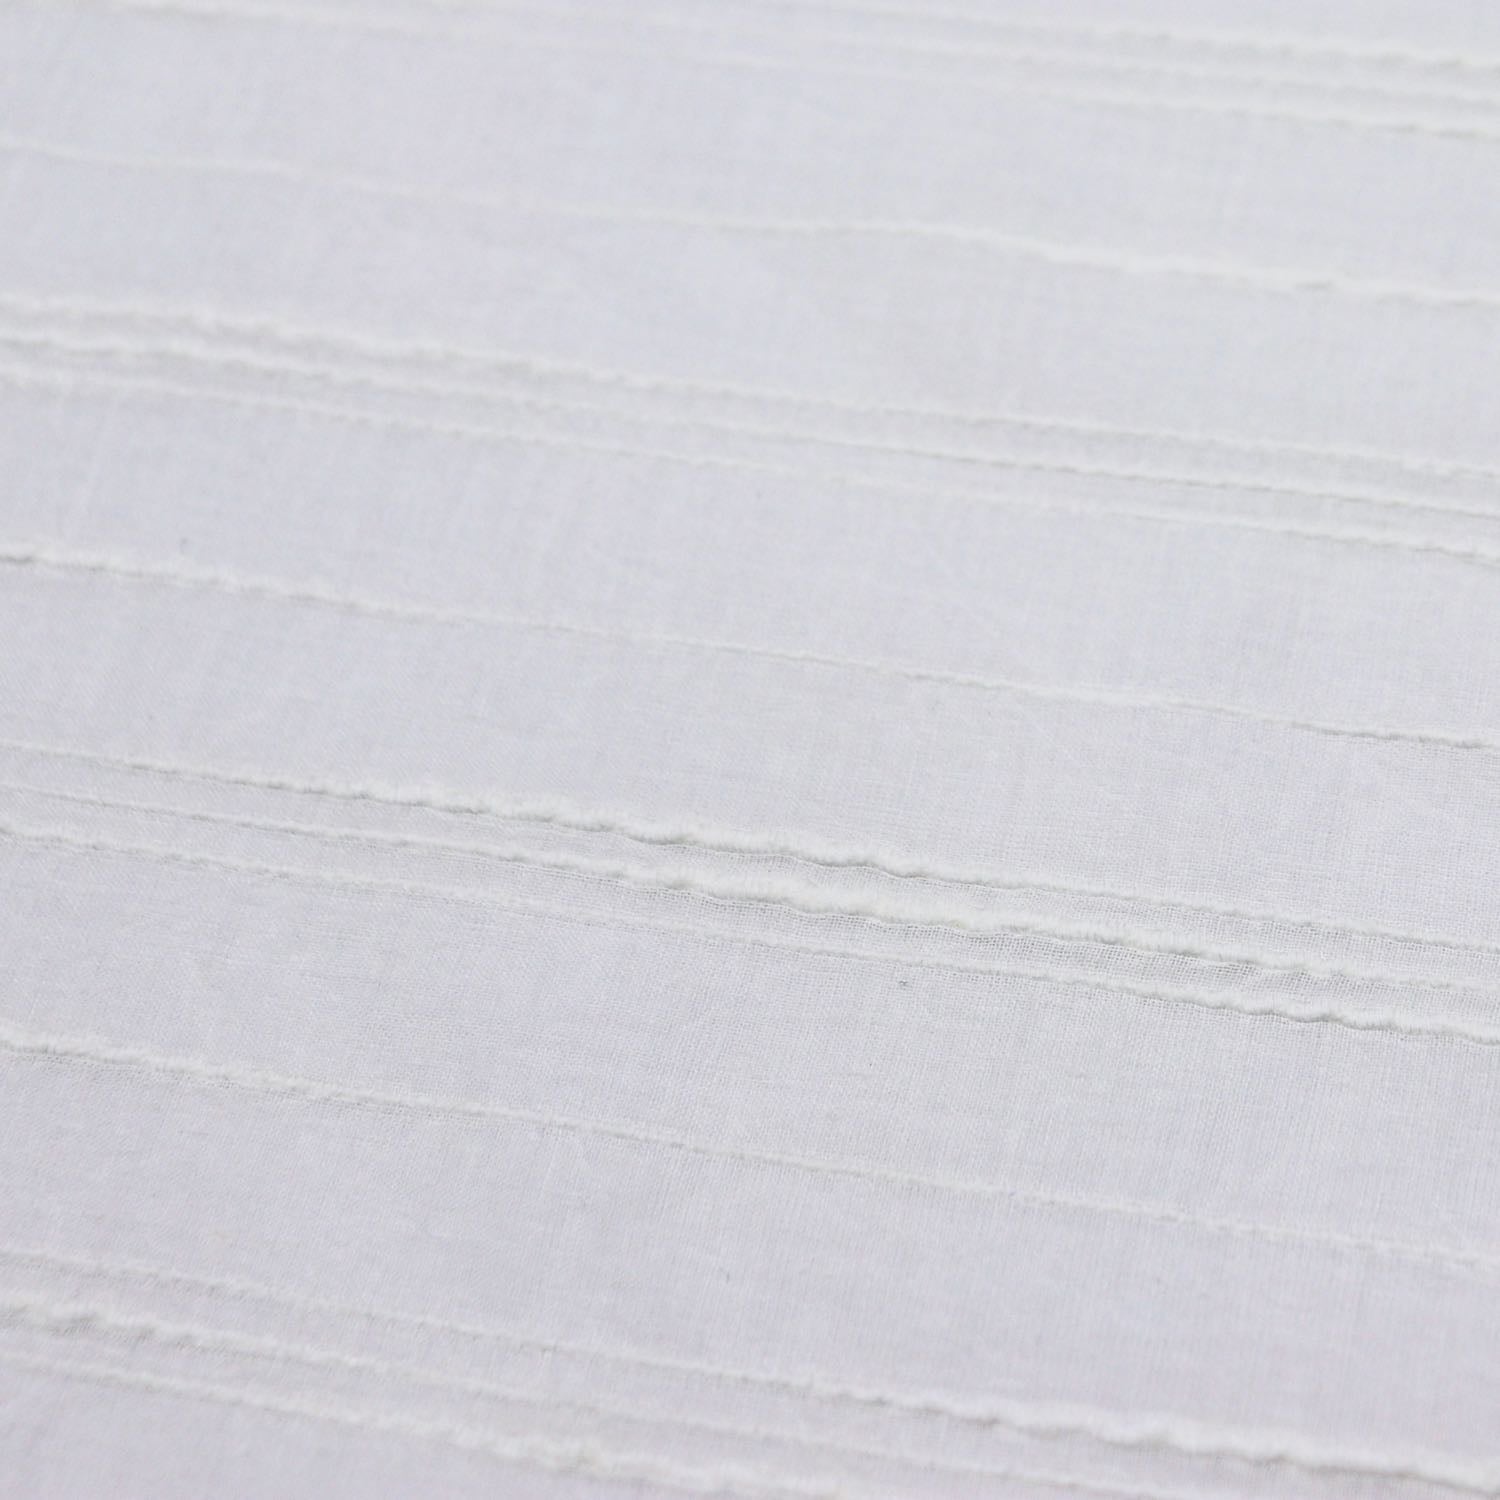 Swatch — Sinuous Stripe Handloom Cotton